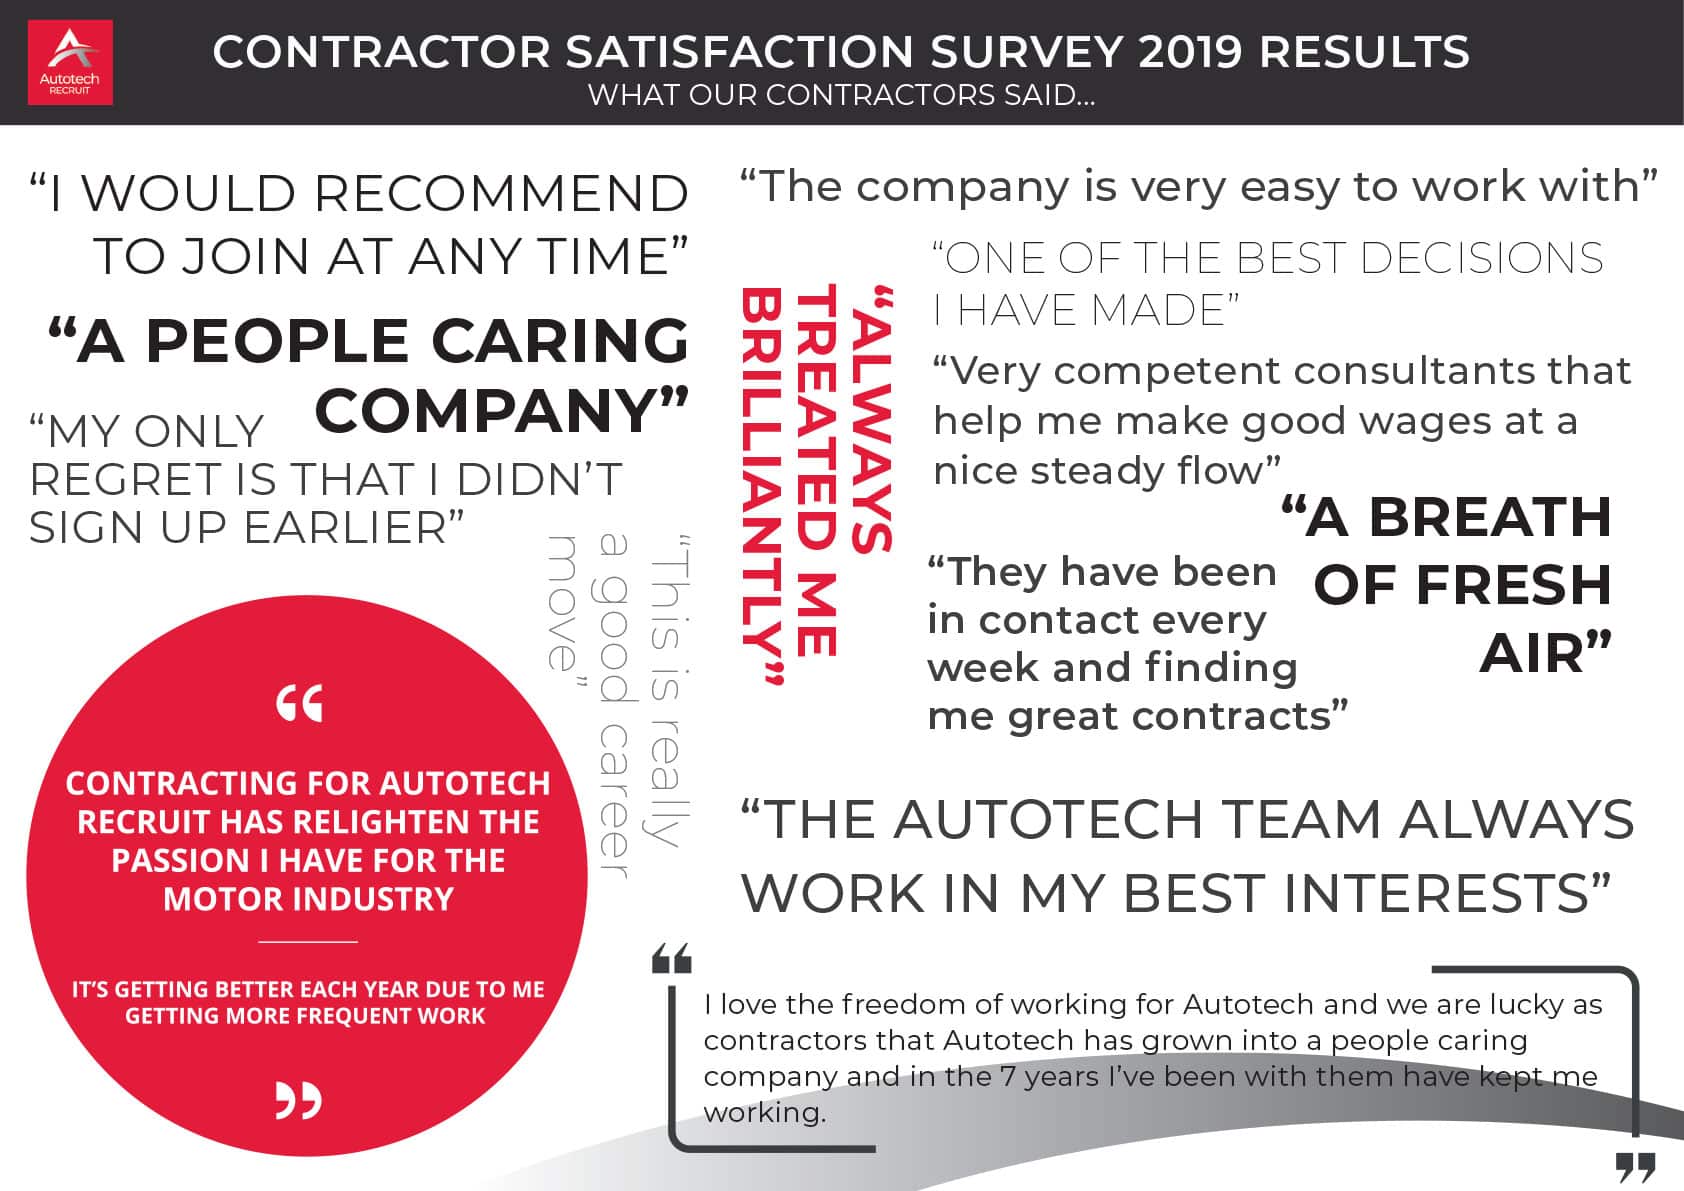 Autotech Recruit 2019 Contractor Satisfaction Survey Results - Quotes